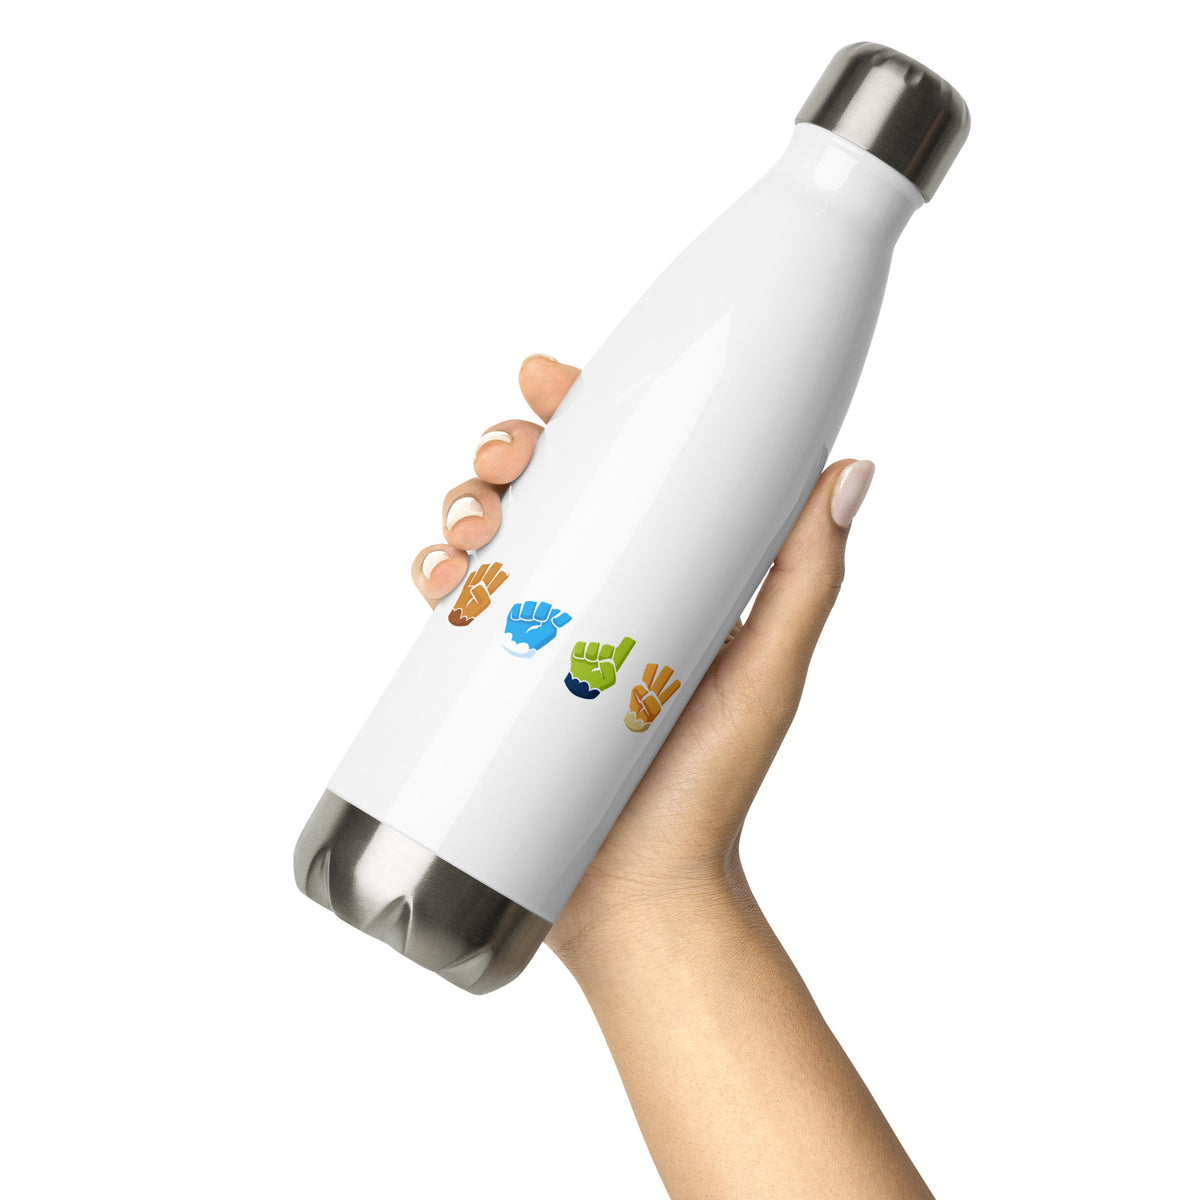 Freeze Warning Stainless Steel Water Bottle – Ninja Kiwi Store